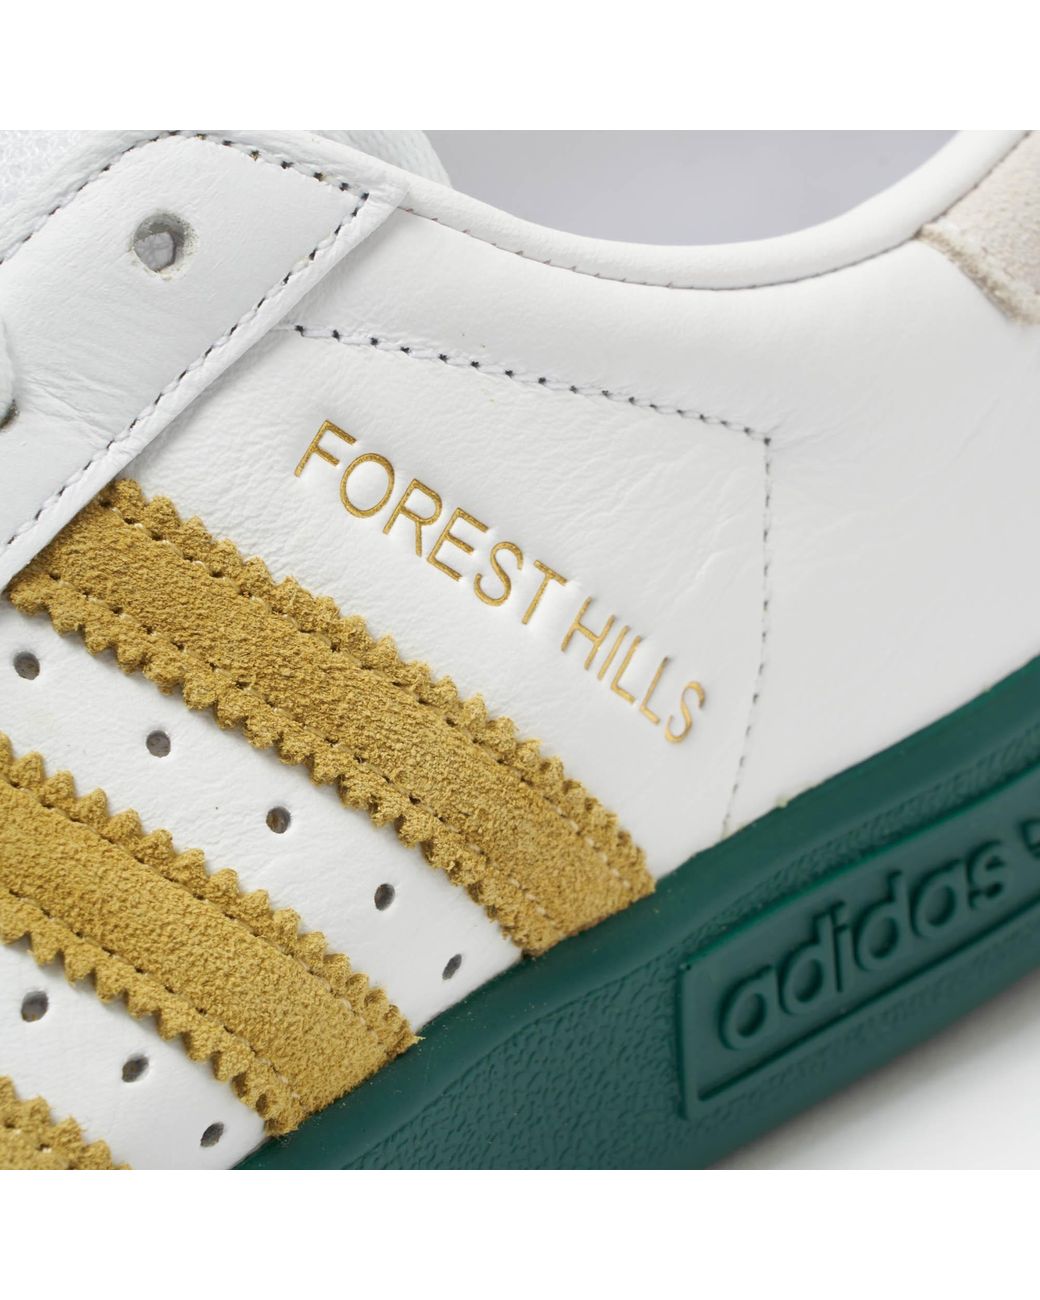 adidas Originals Forest Hills White & Collegiate Green Trainer for Men |  Lyst Australia